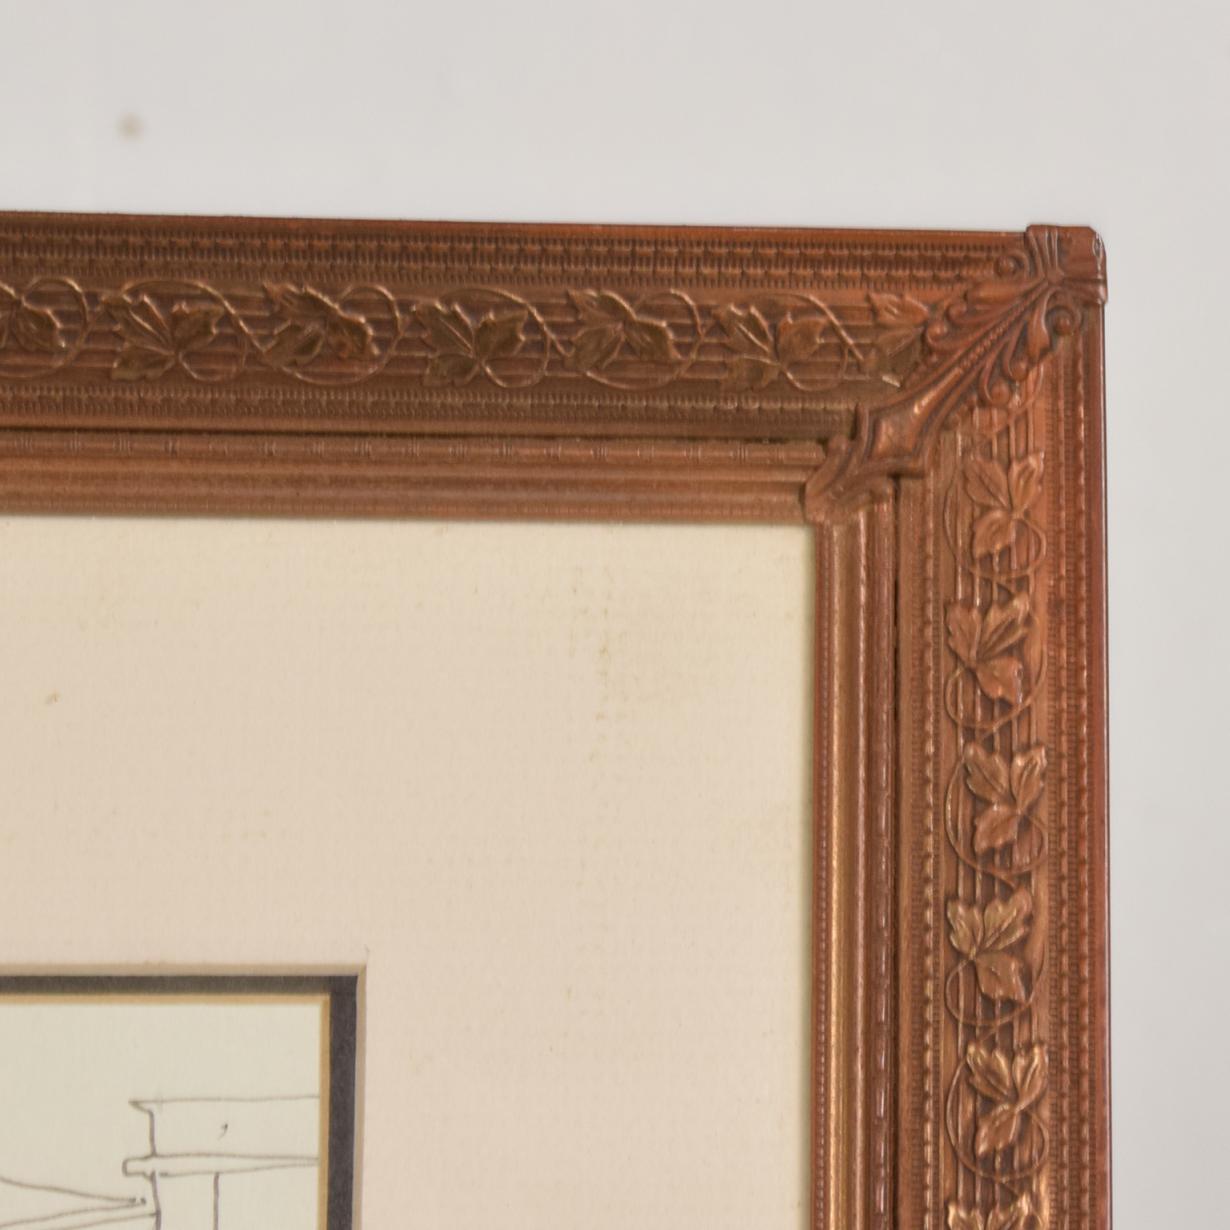 Patinated Art Deco Period Brass Picture Frame, Grapevine Ornamentation